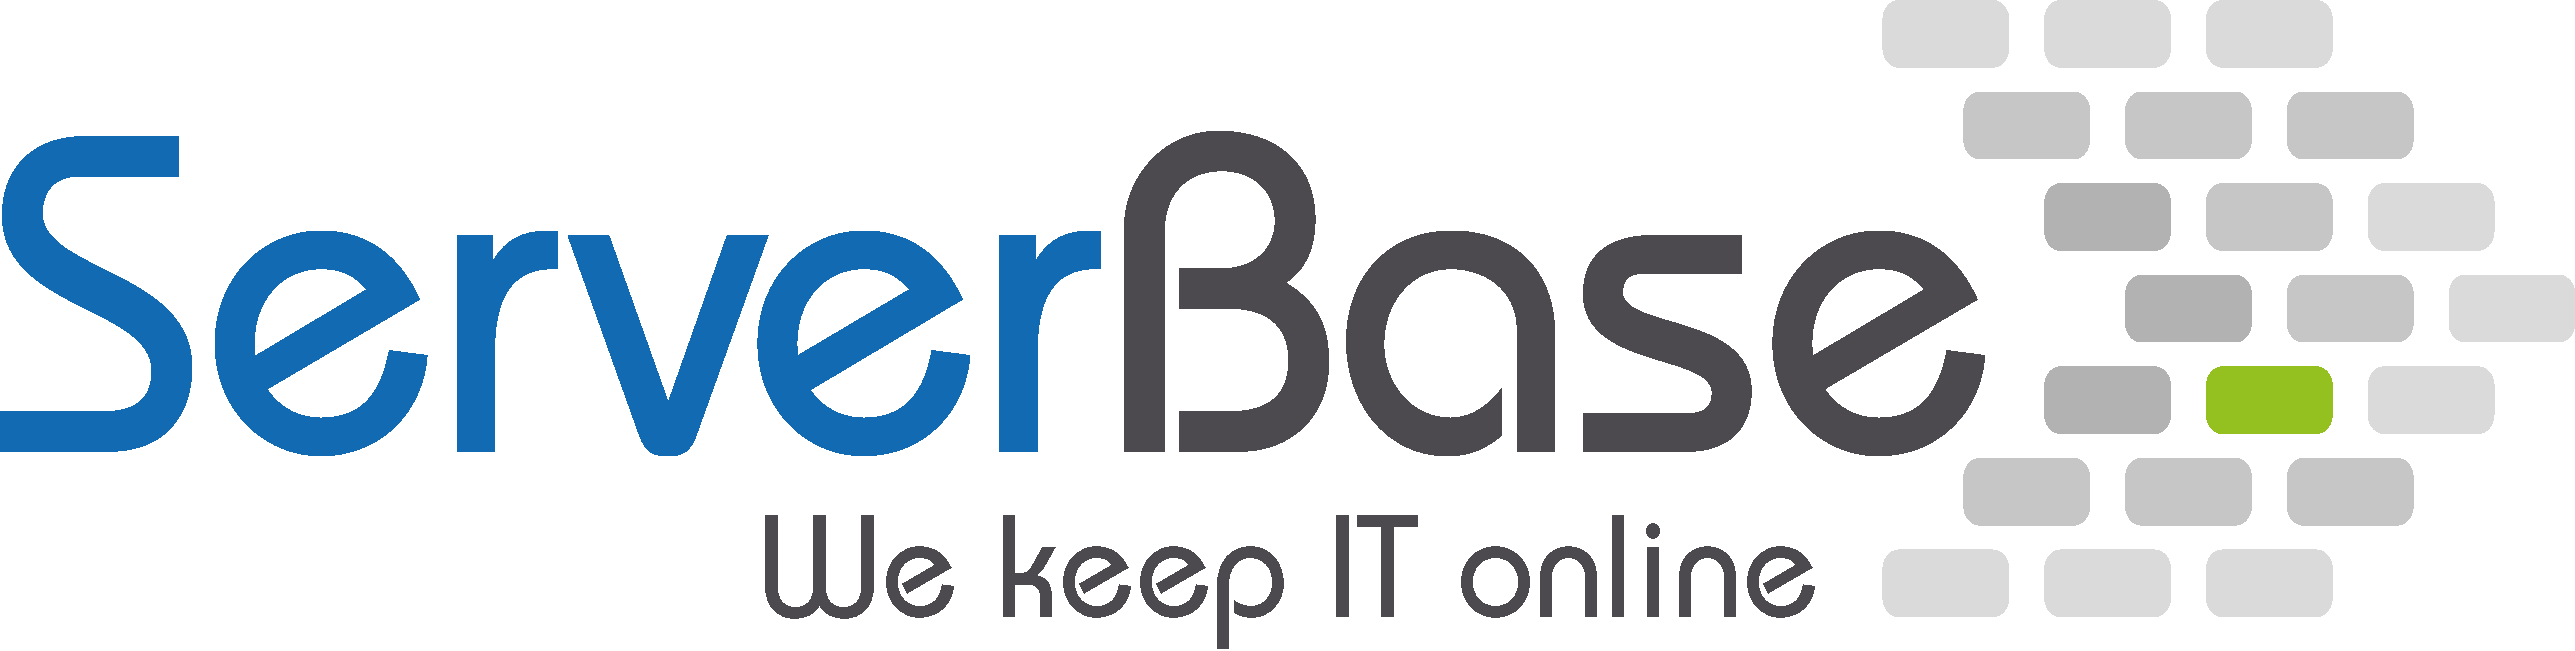 ServerBase